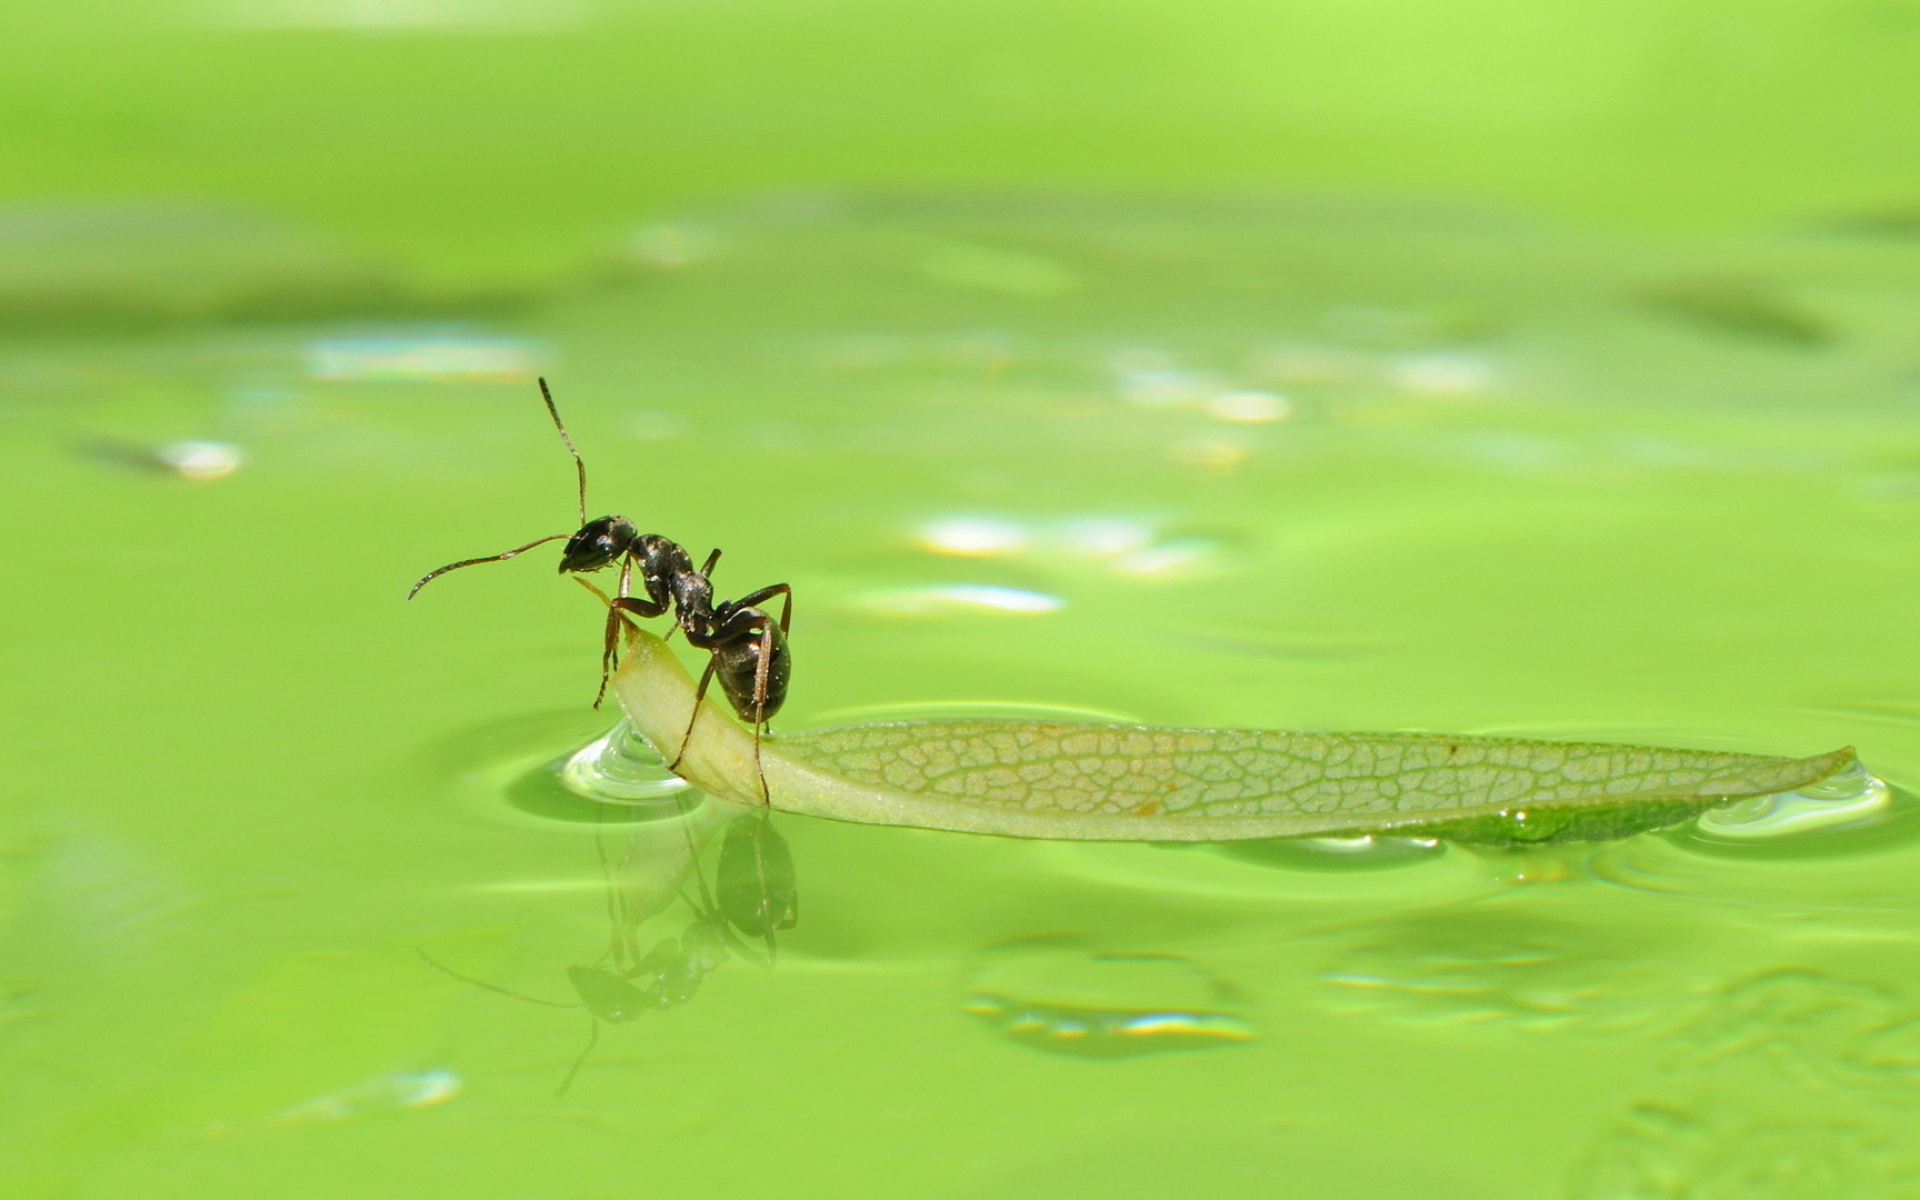 Ant on leaf, Floating on water, Animal wallpaper, Serene scene, 1920x1200 HD Desktop